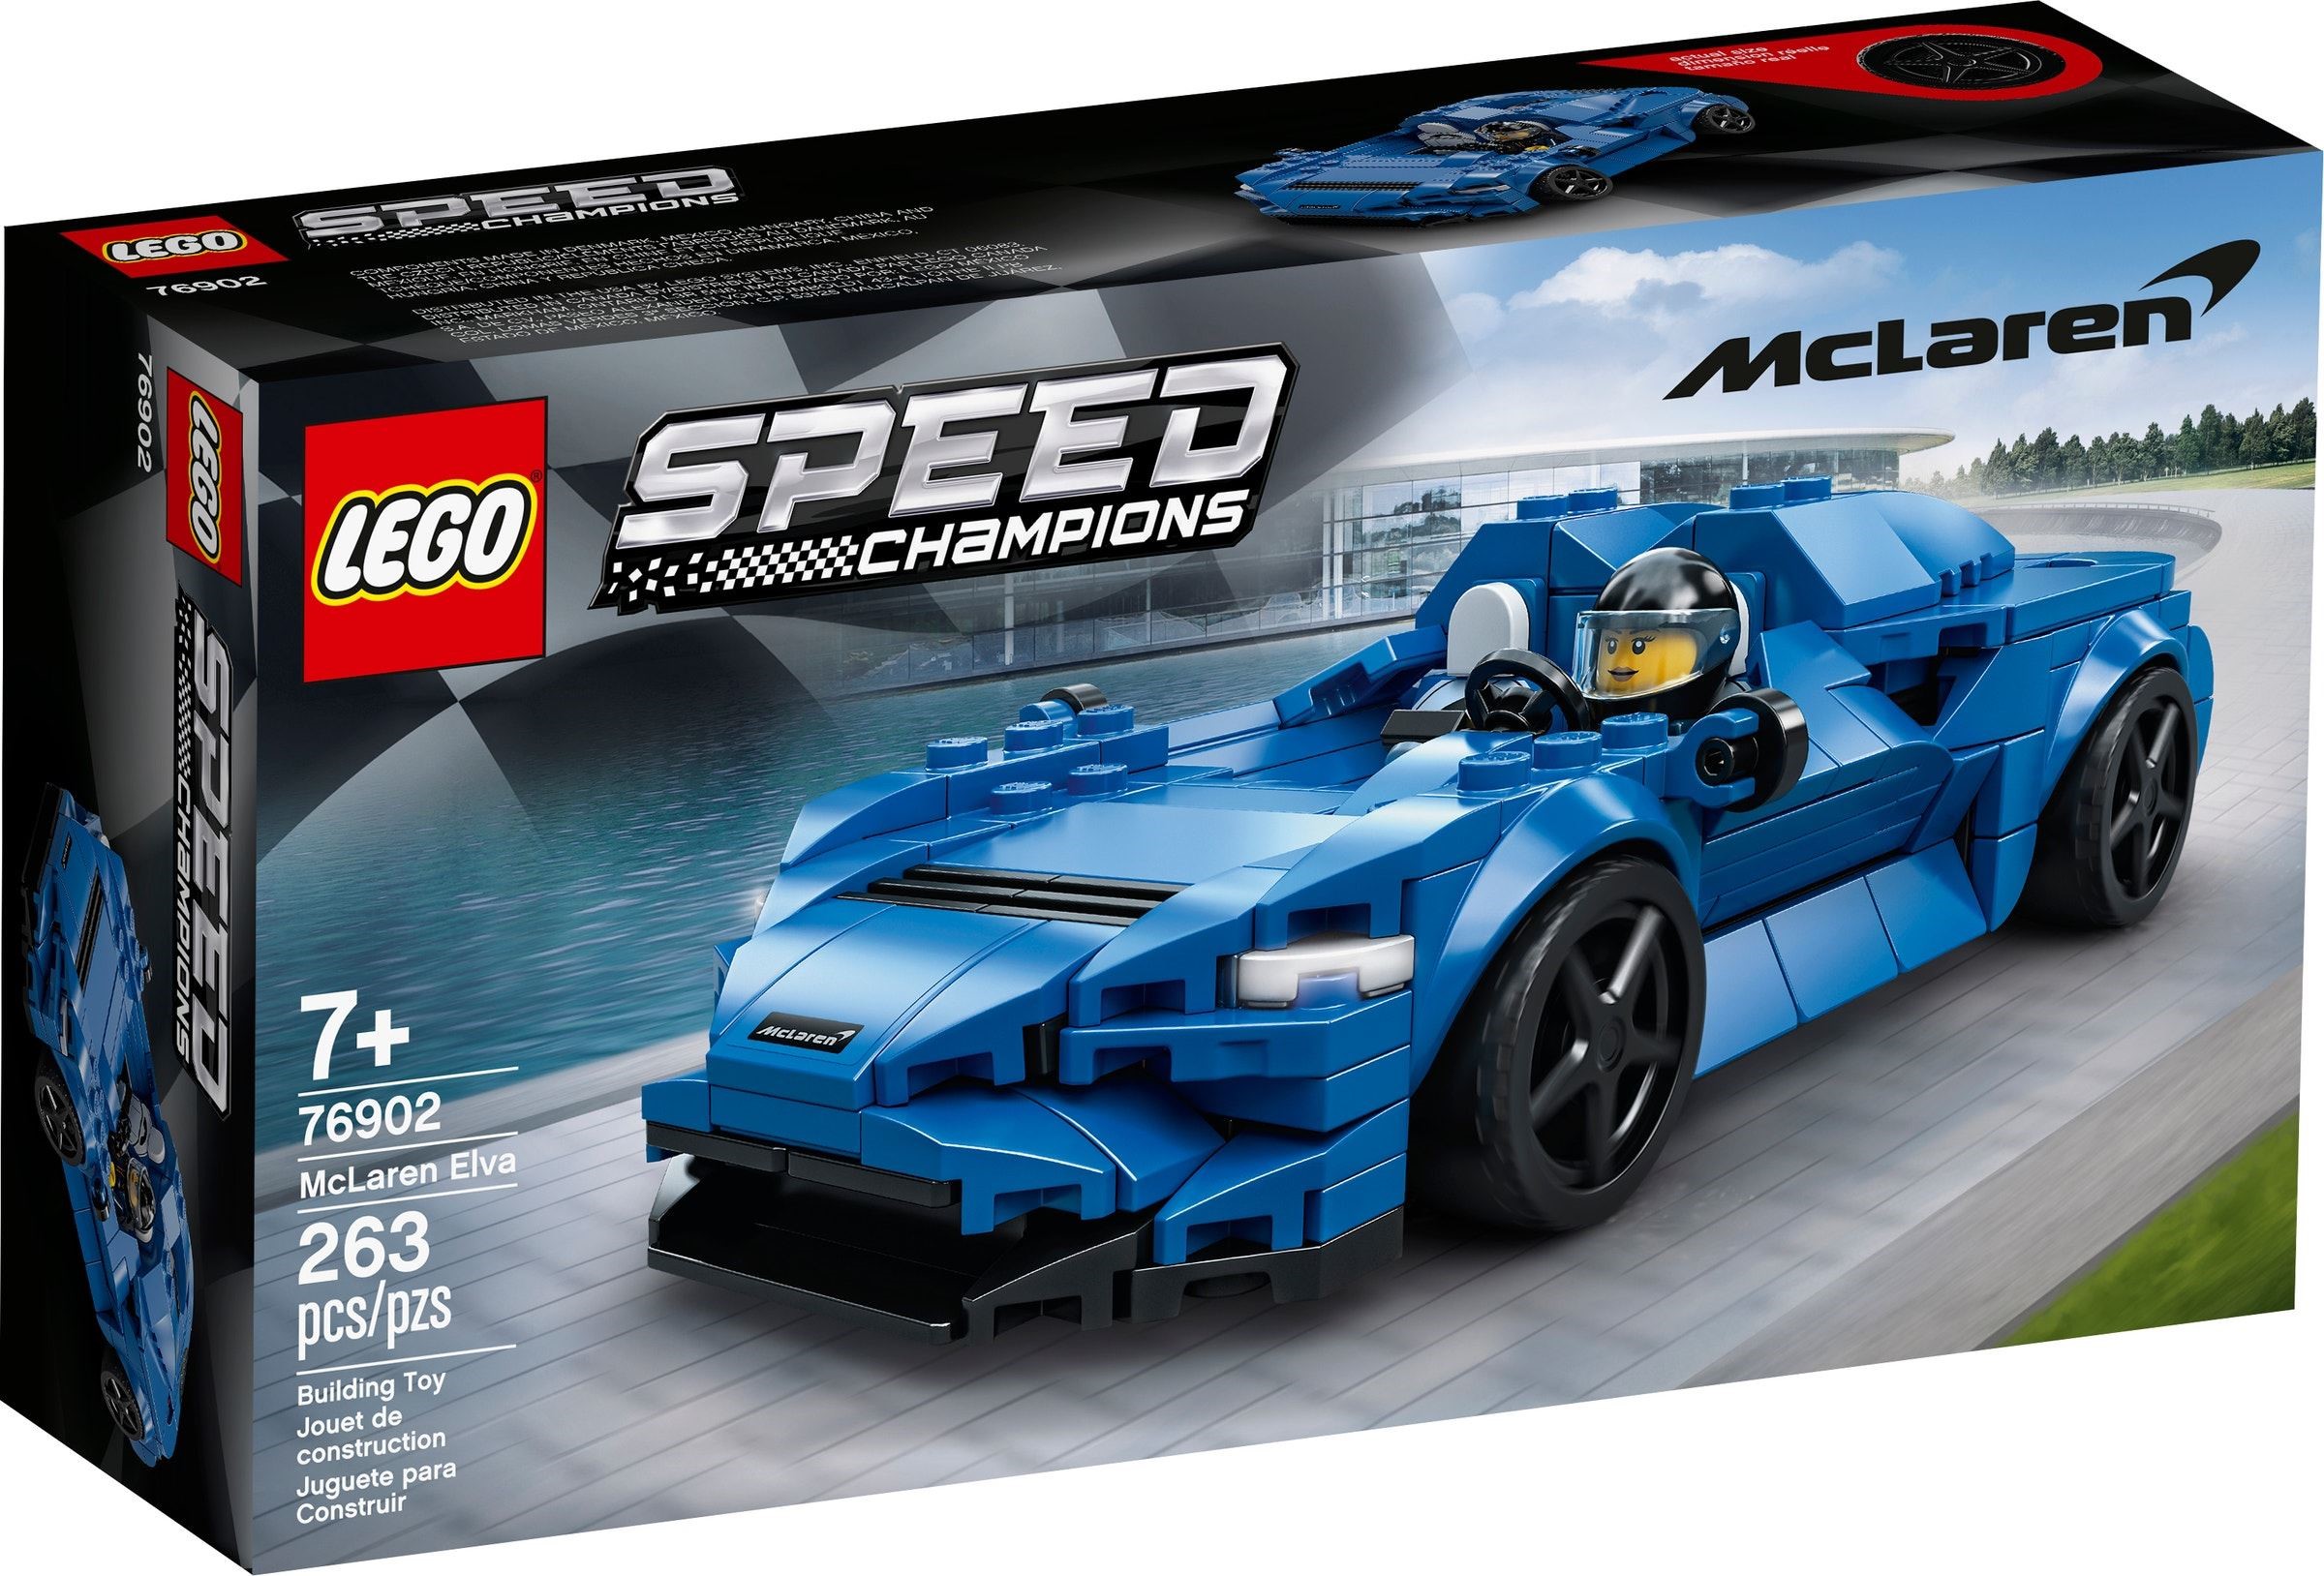 Lego 76902 McLaren Elva - Lego Speed champions set for sale best price